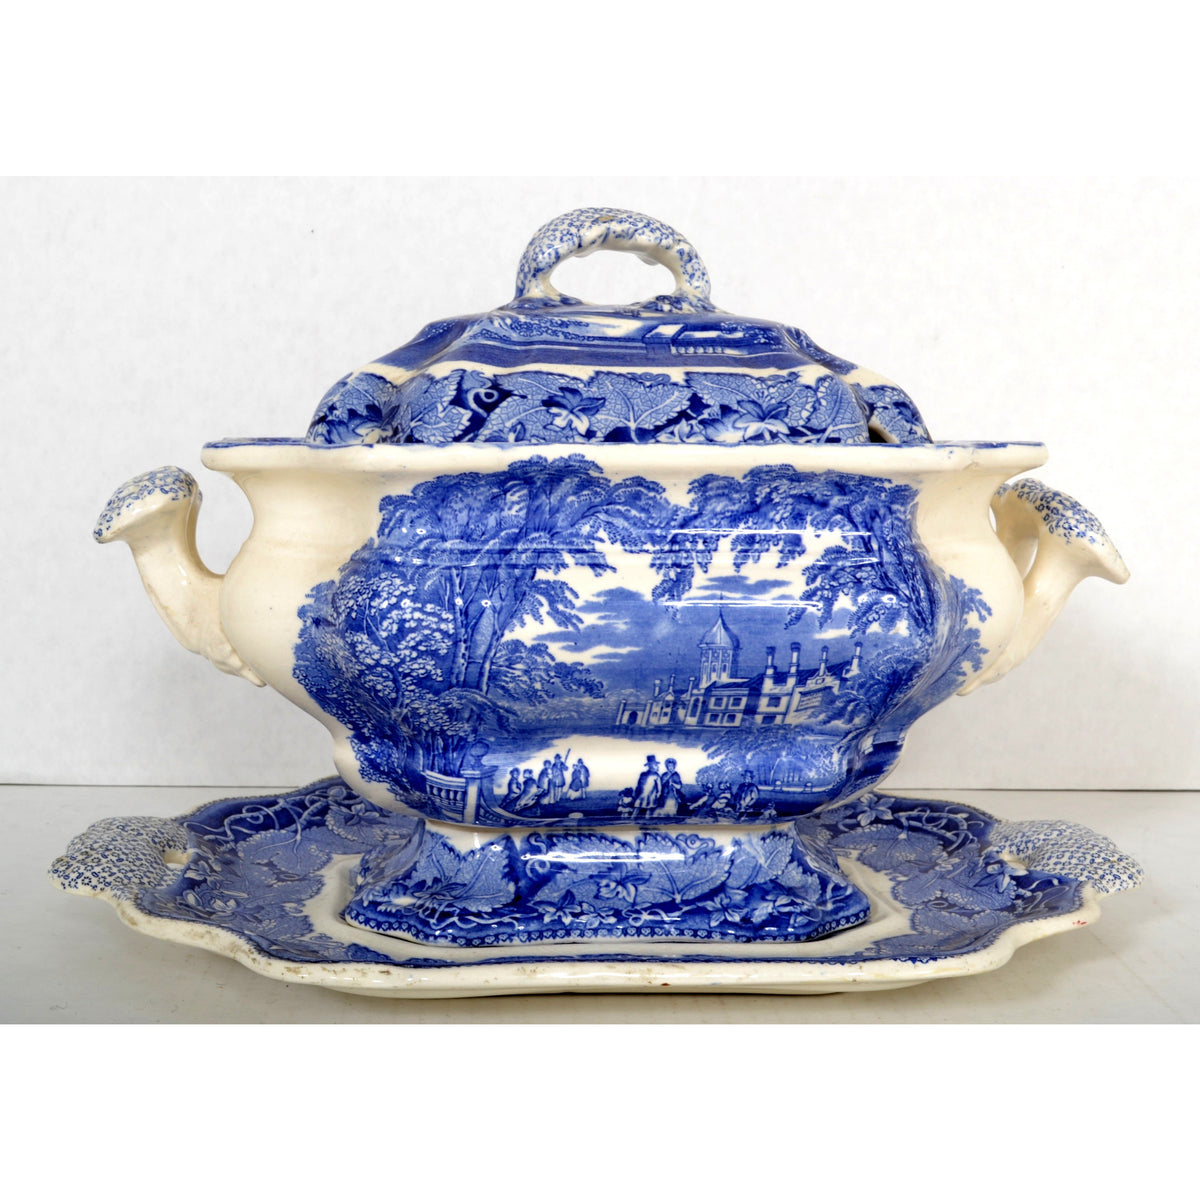 Antique English Mason's Ironstone Blue & White "Blue Vista" Porcelain Tureen/Serving Dish, Circa 1880